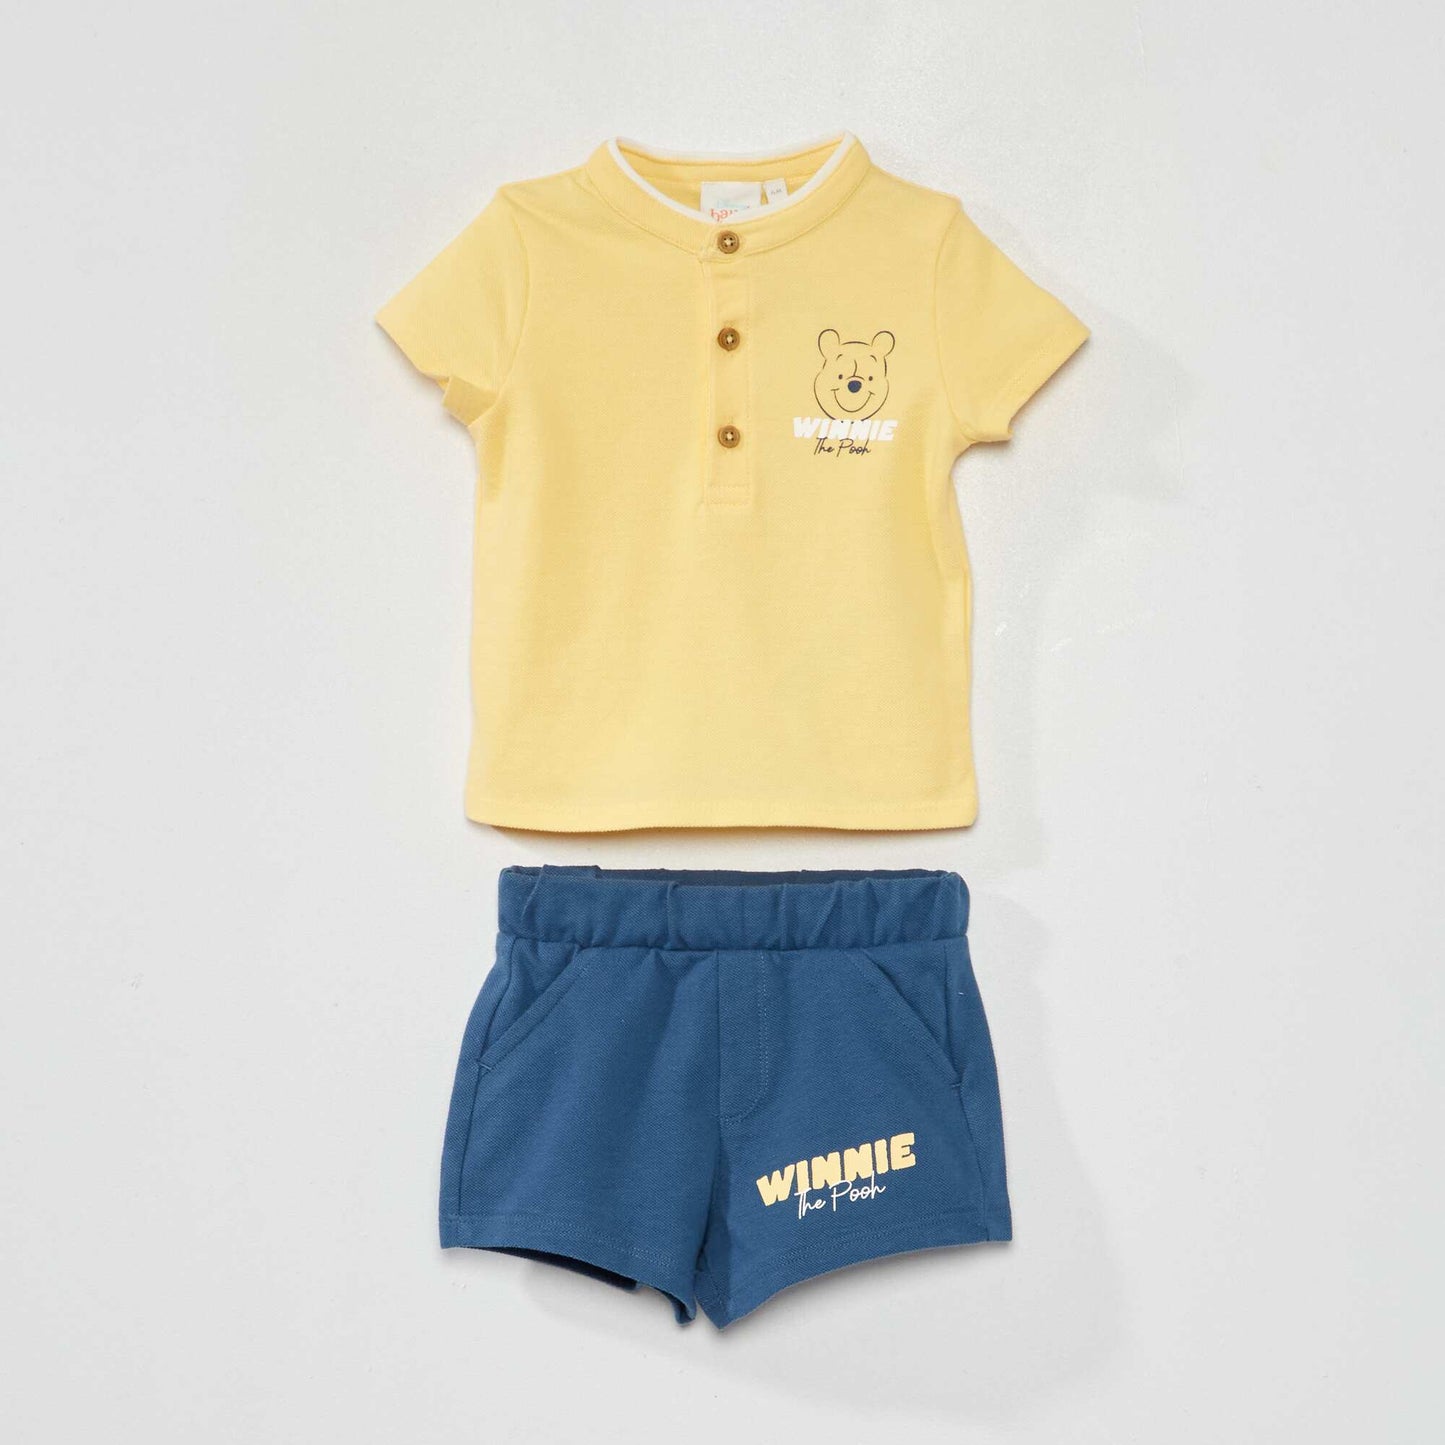 Ensemble tee-shirt + short 'Winnie' Jaune/bleu marine